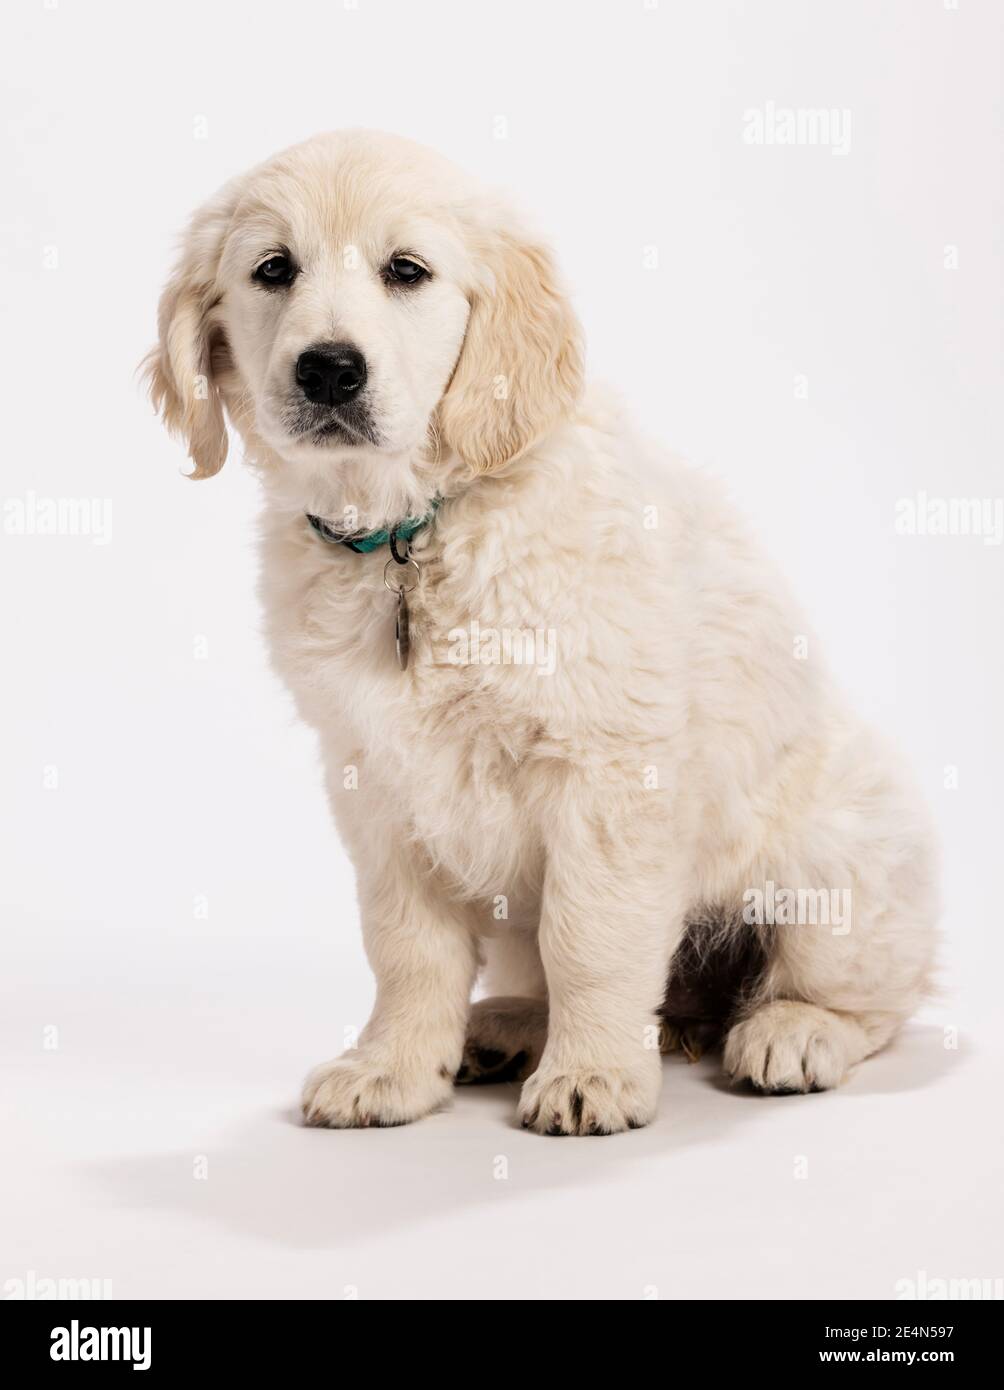 Platinum, or Cream colored Golden Retriever puppy on white photo studio background Stock Photo